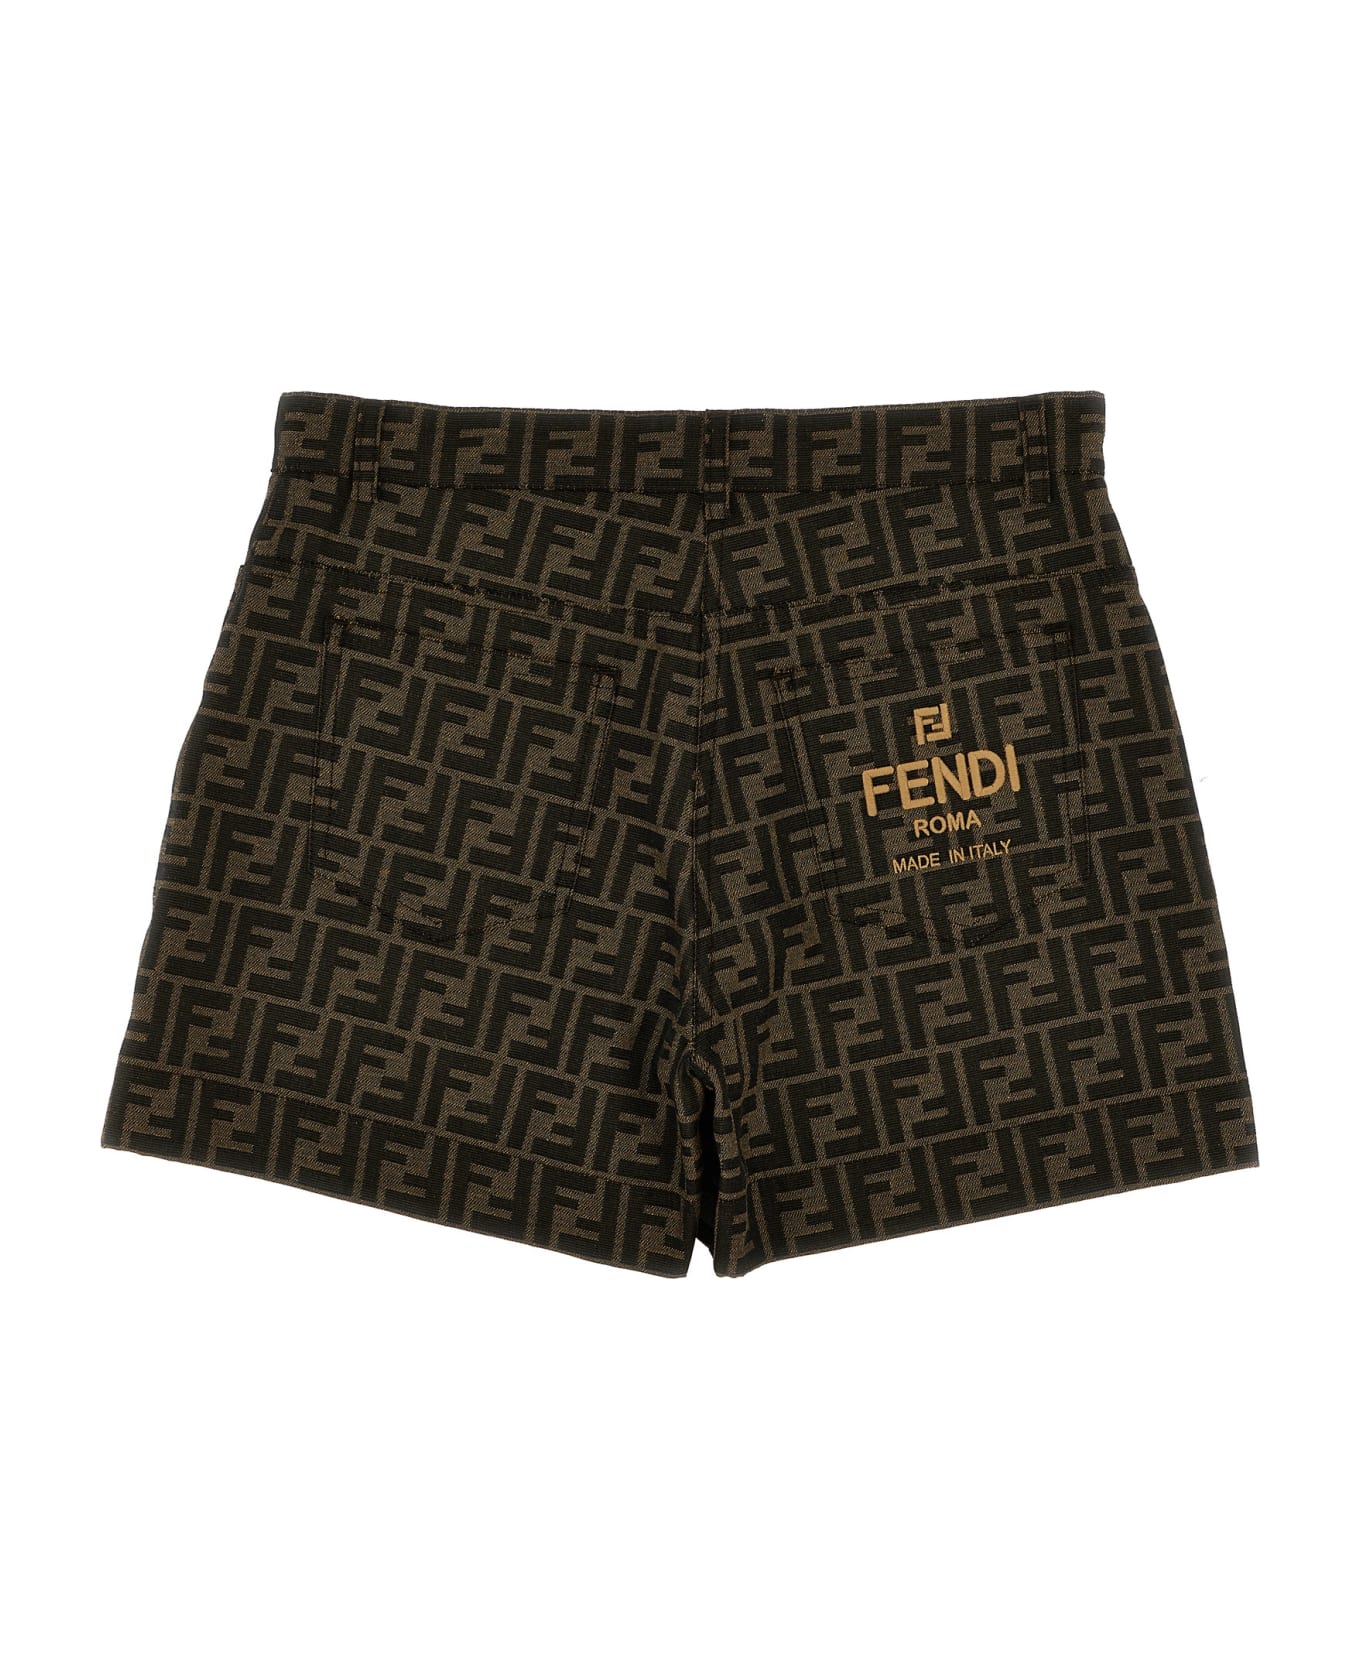 Fendi Ff Shorts